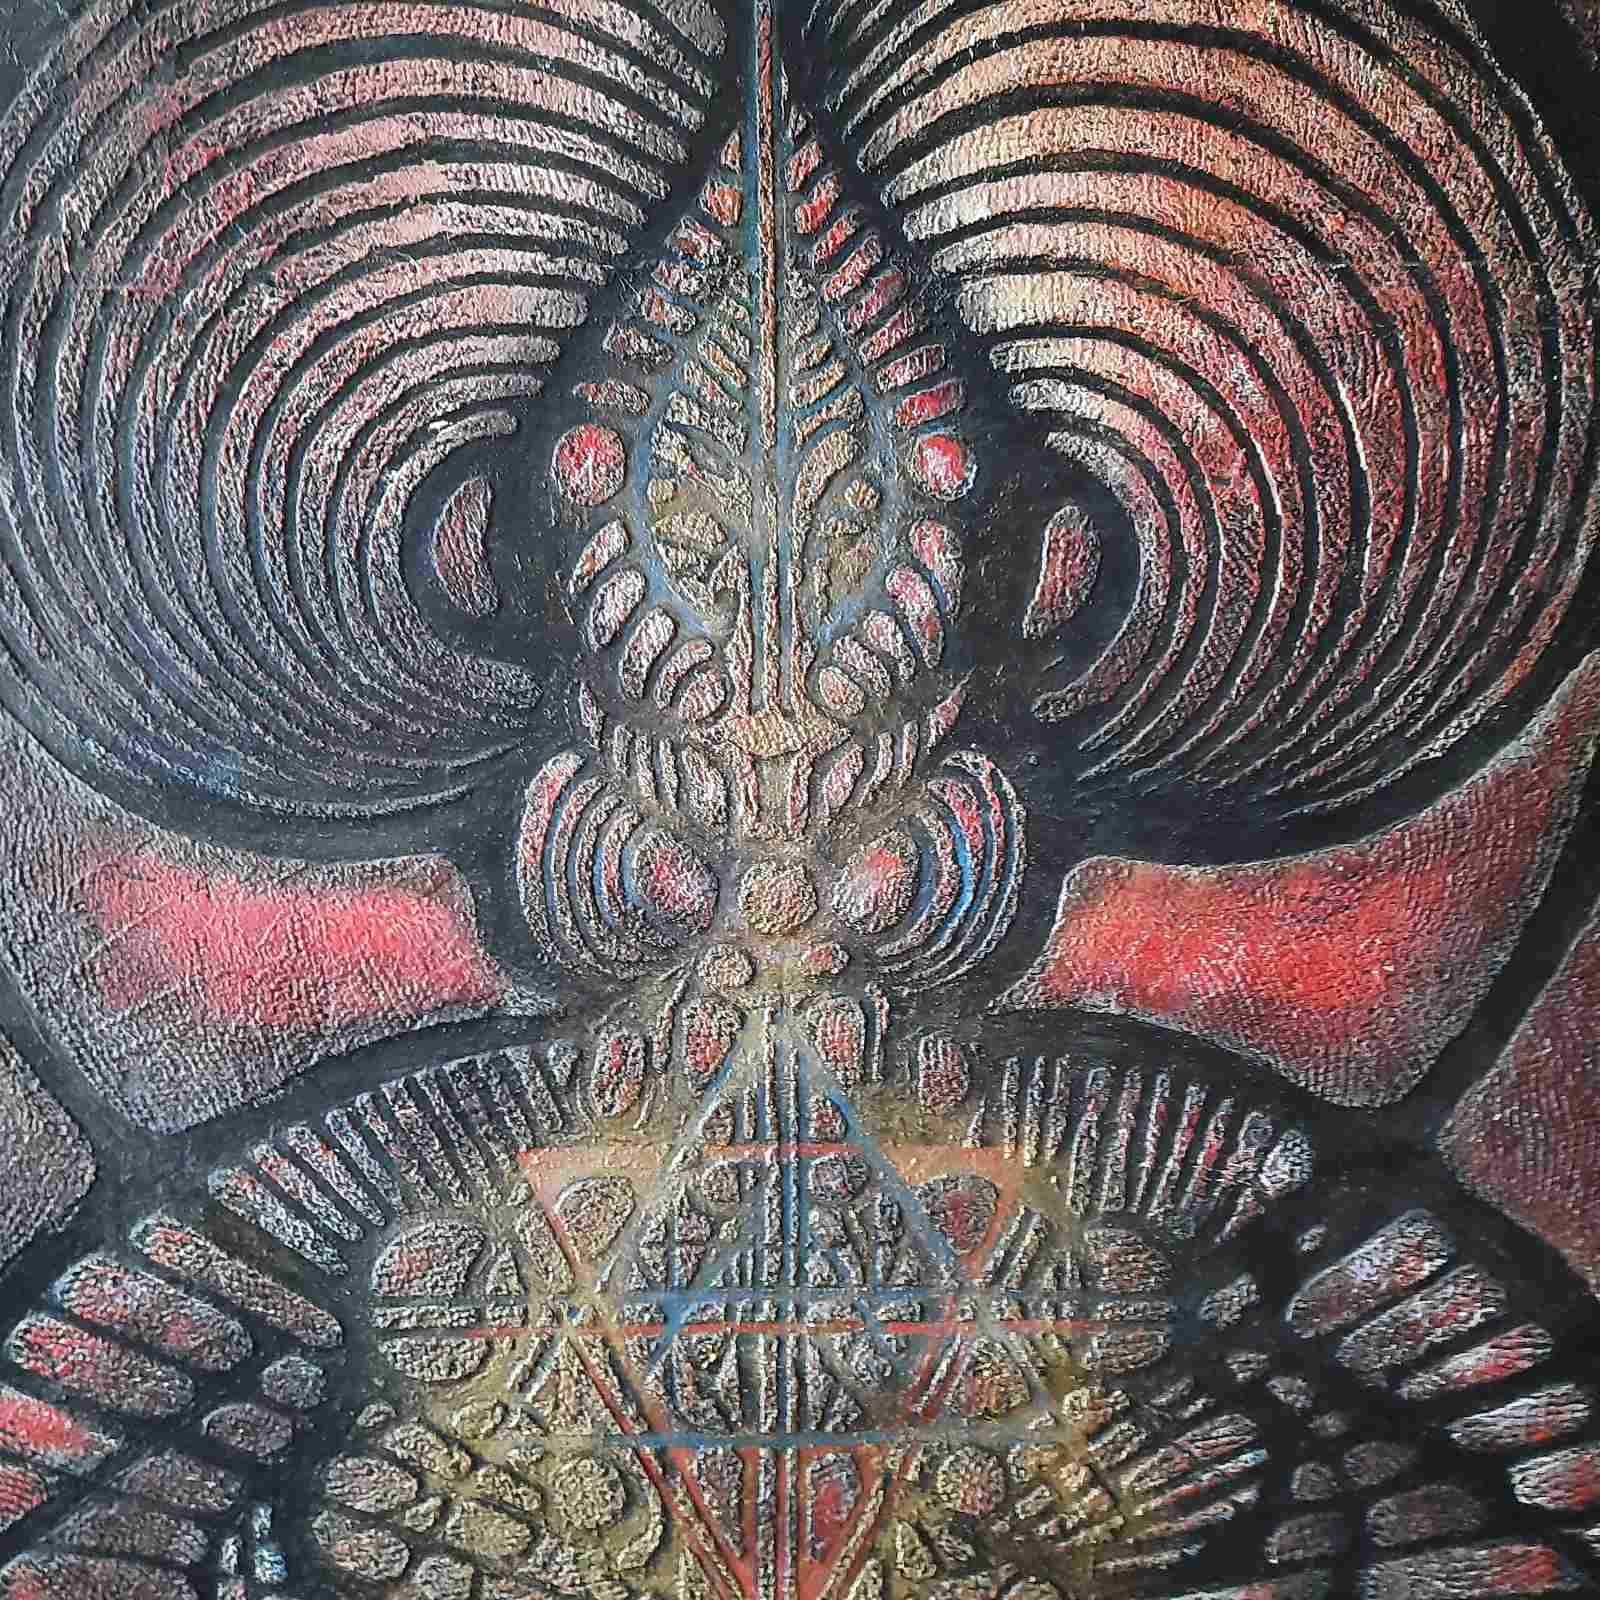 картина Первинна рiвновага холст масло художник Горяний И.М. 1997 год